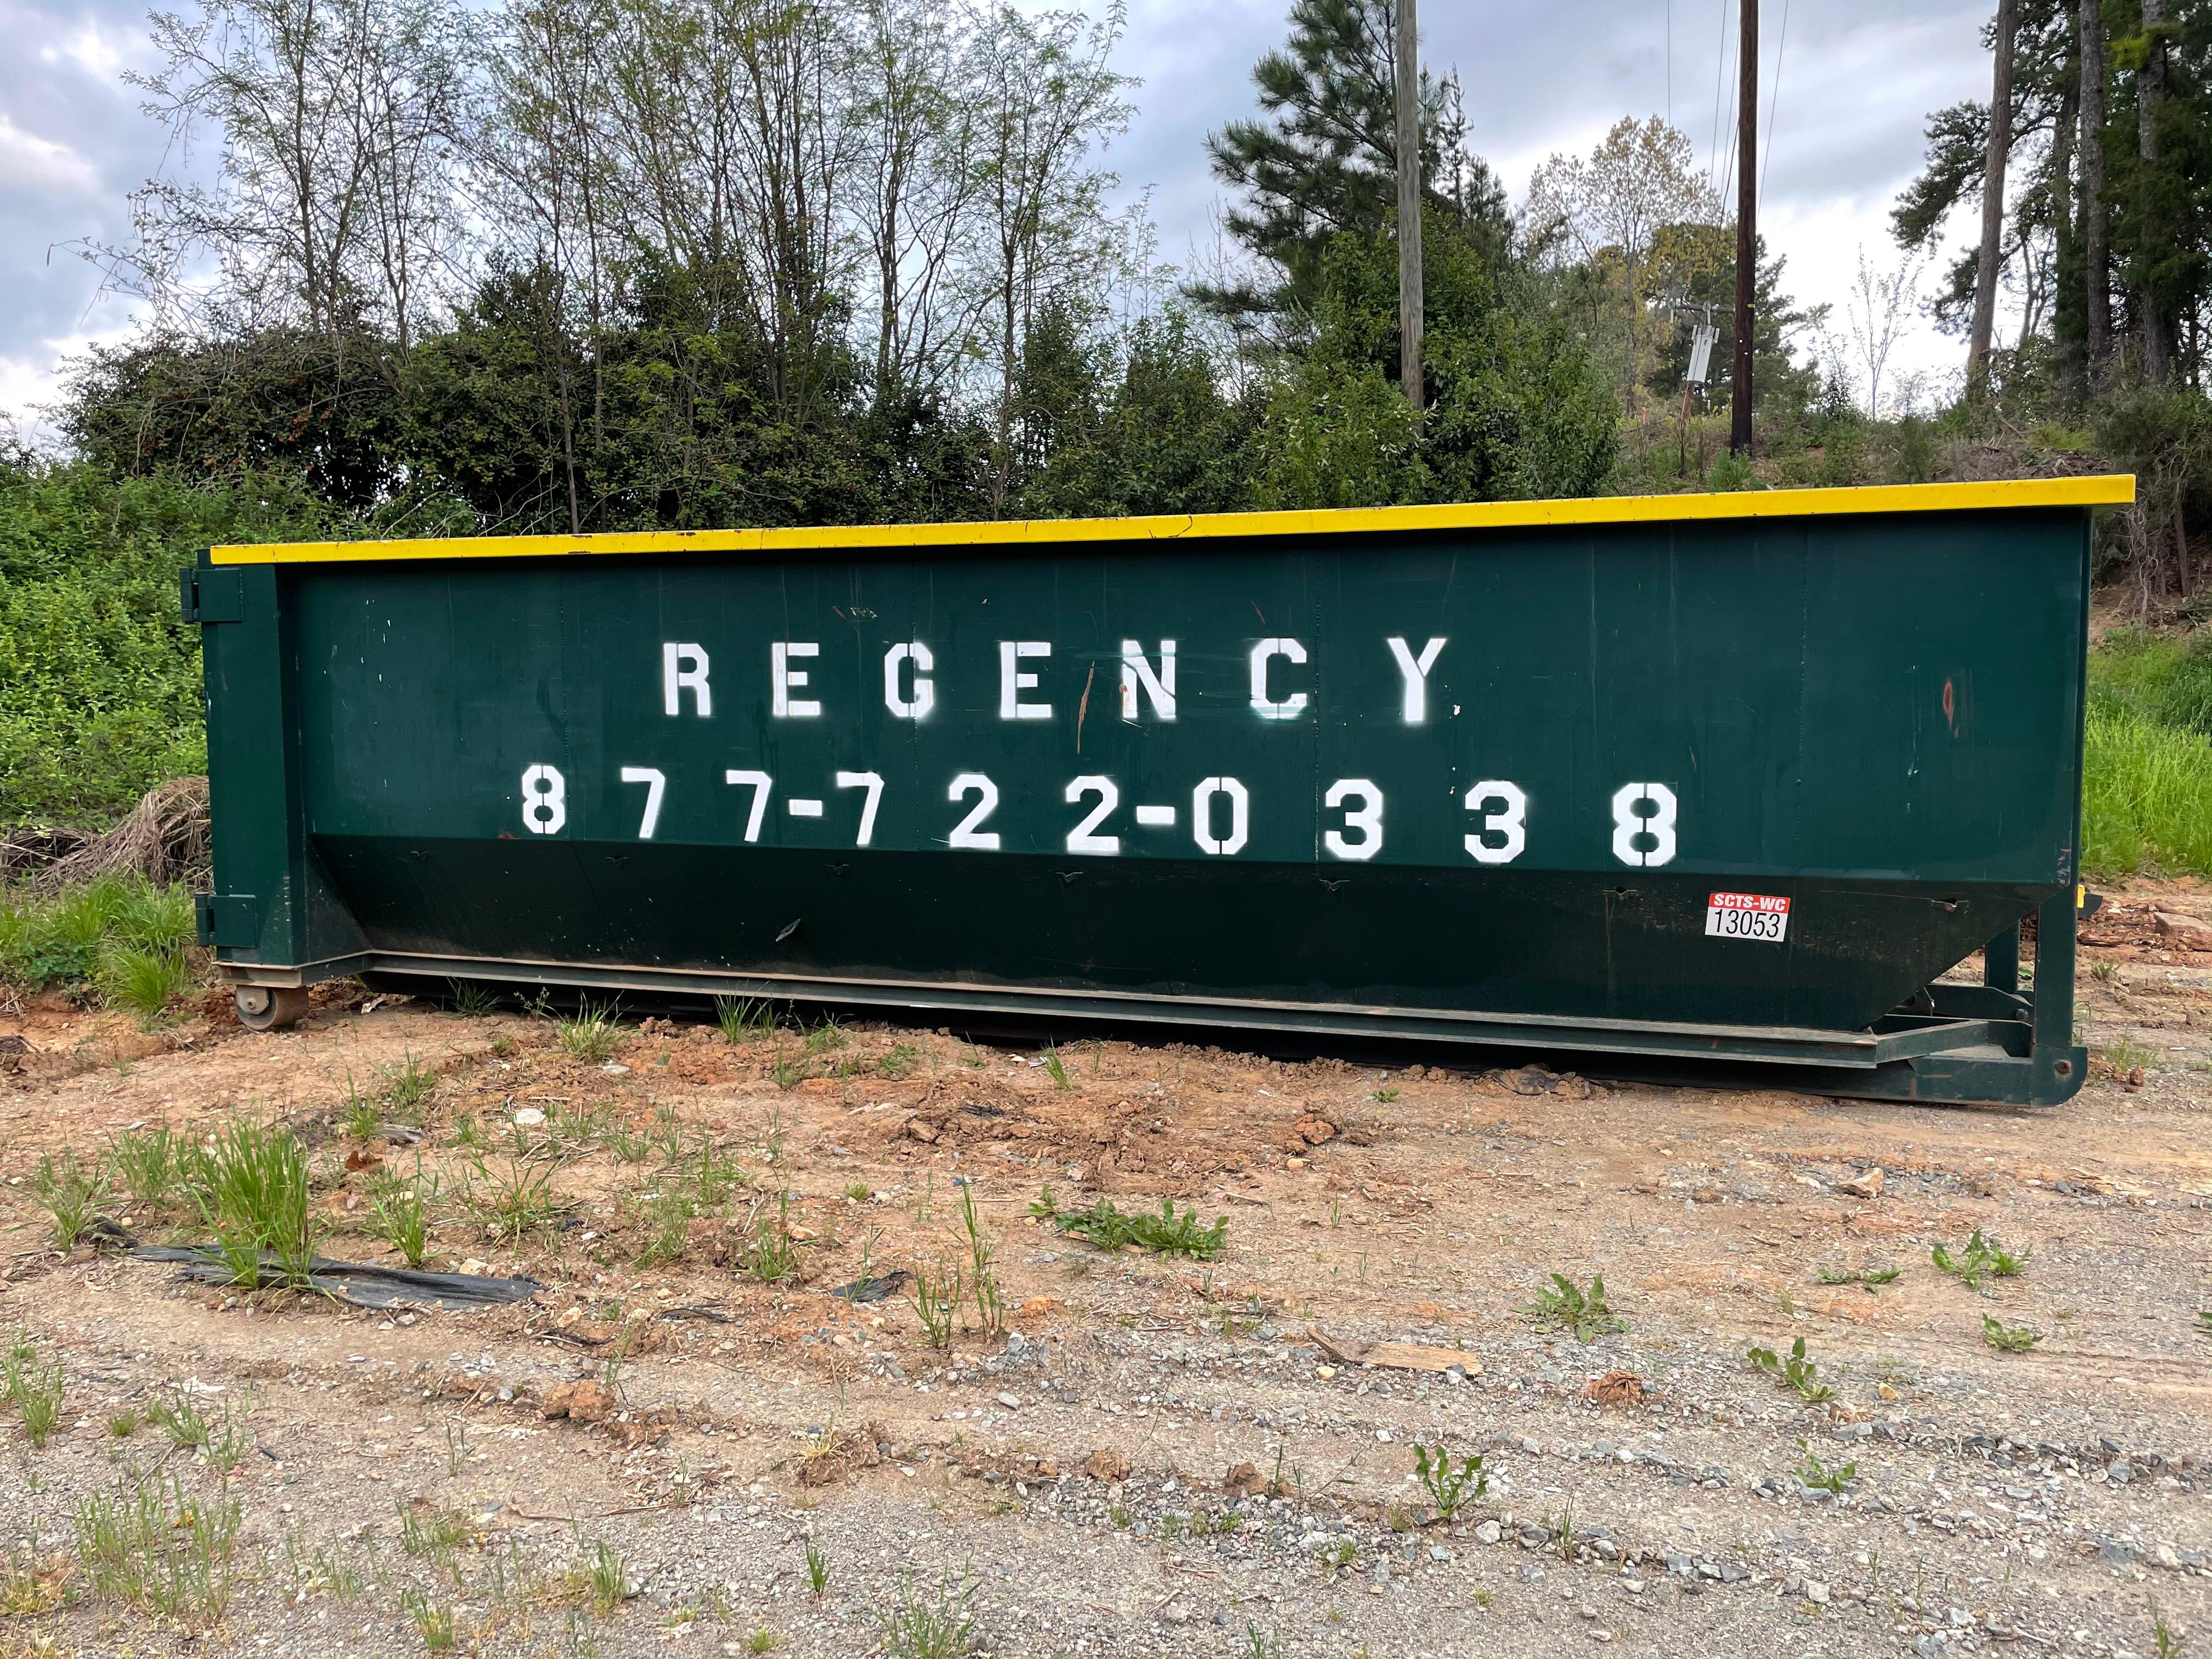 30YD Dumpster Rental Regency Hauling Mooresville (980)270-2373